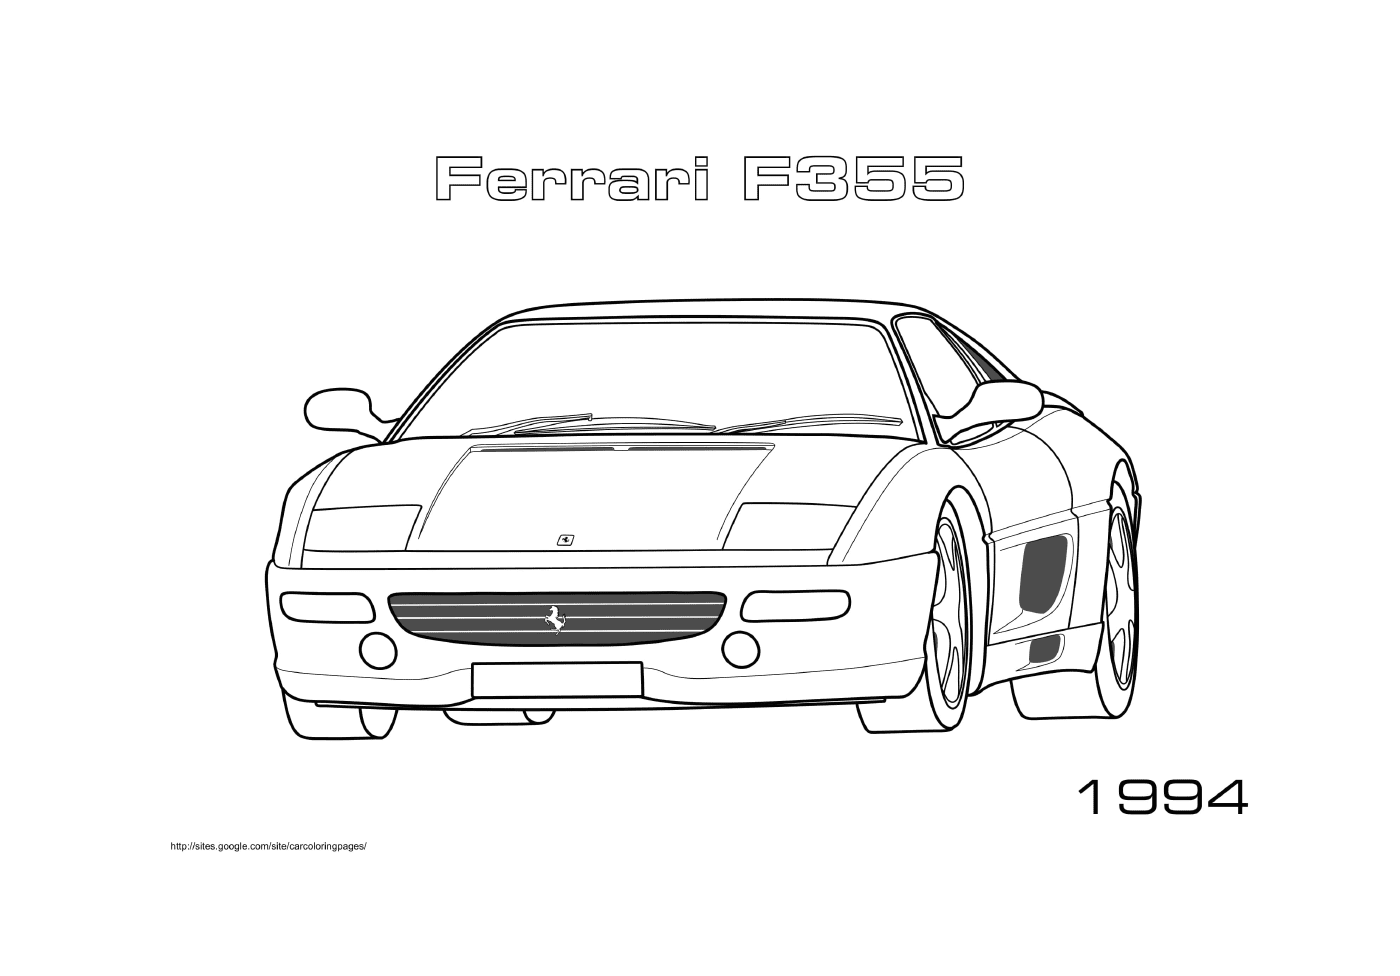  A. Автомобиль Ferrari F355 1994 года 